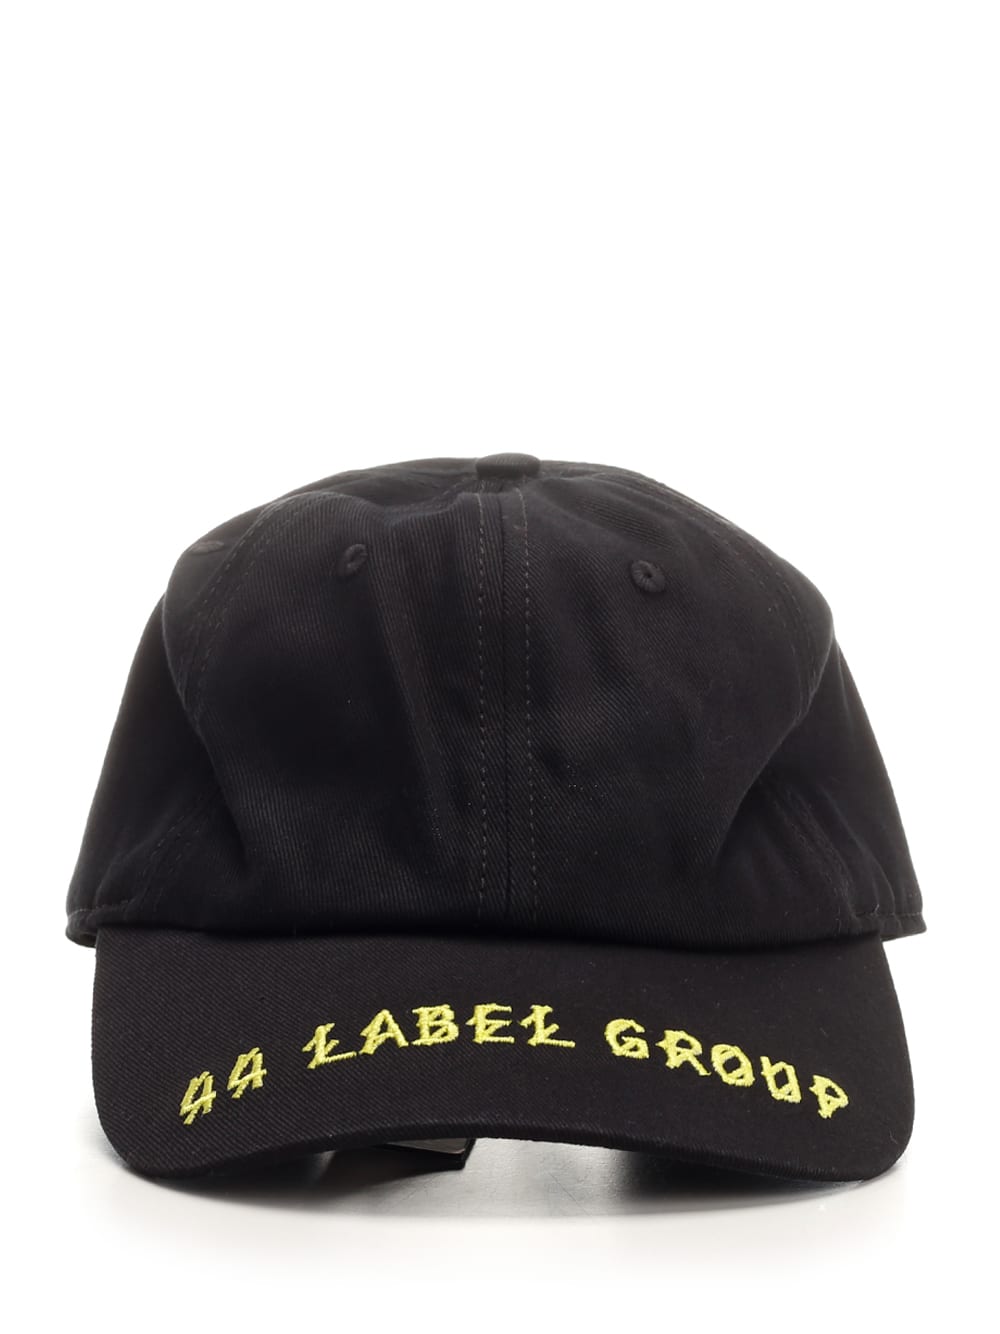 Shop 44 Label Group Emboridered Baseball Cap